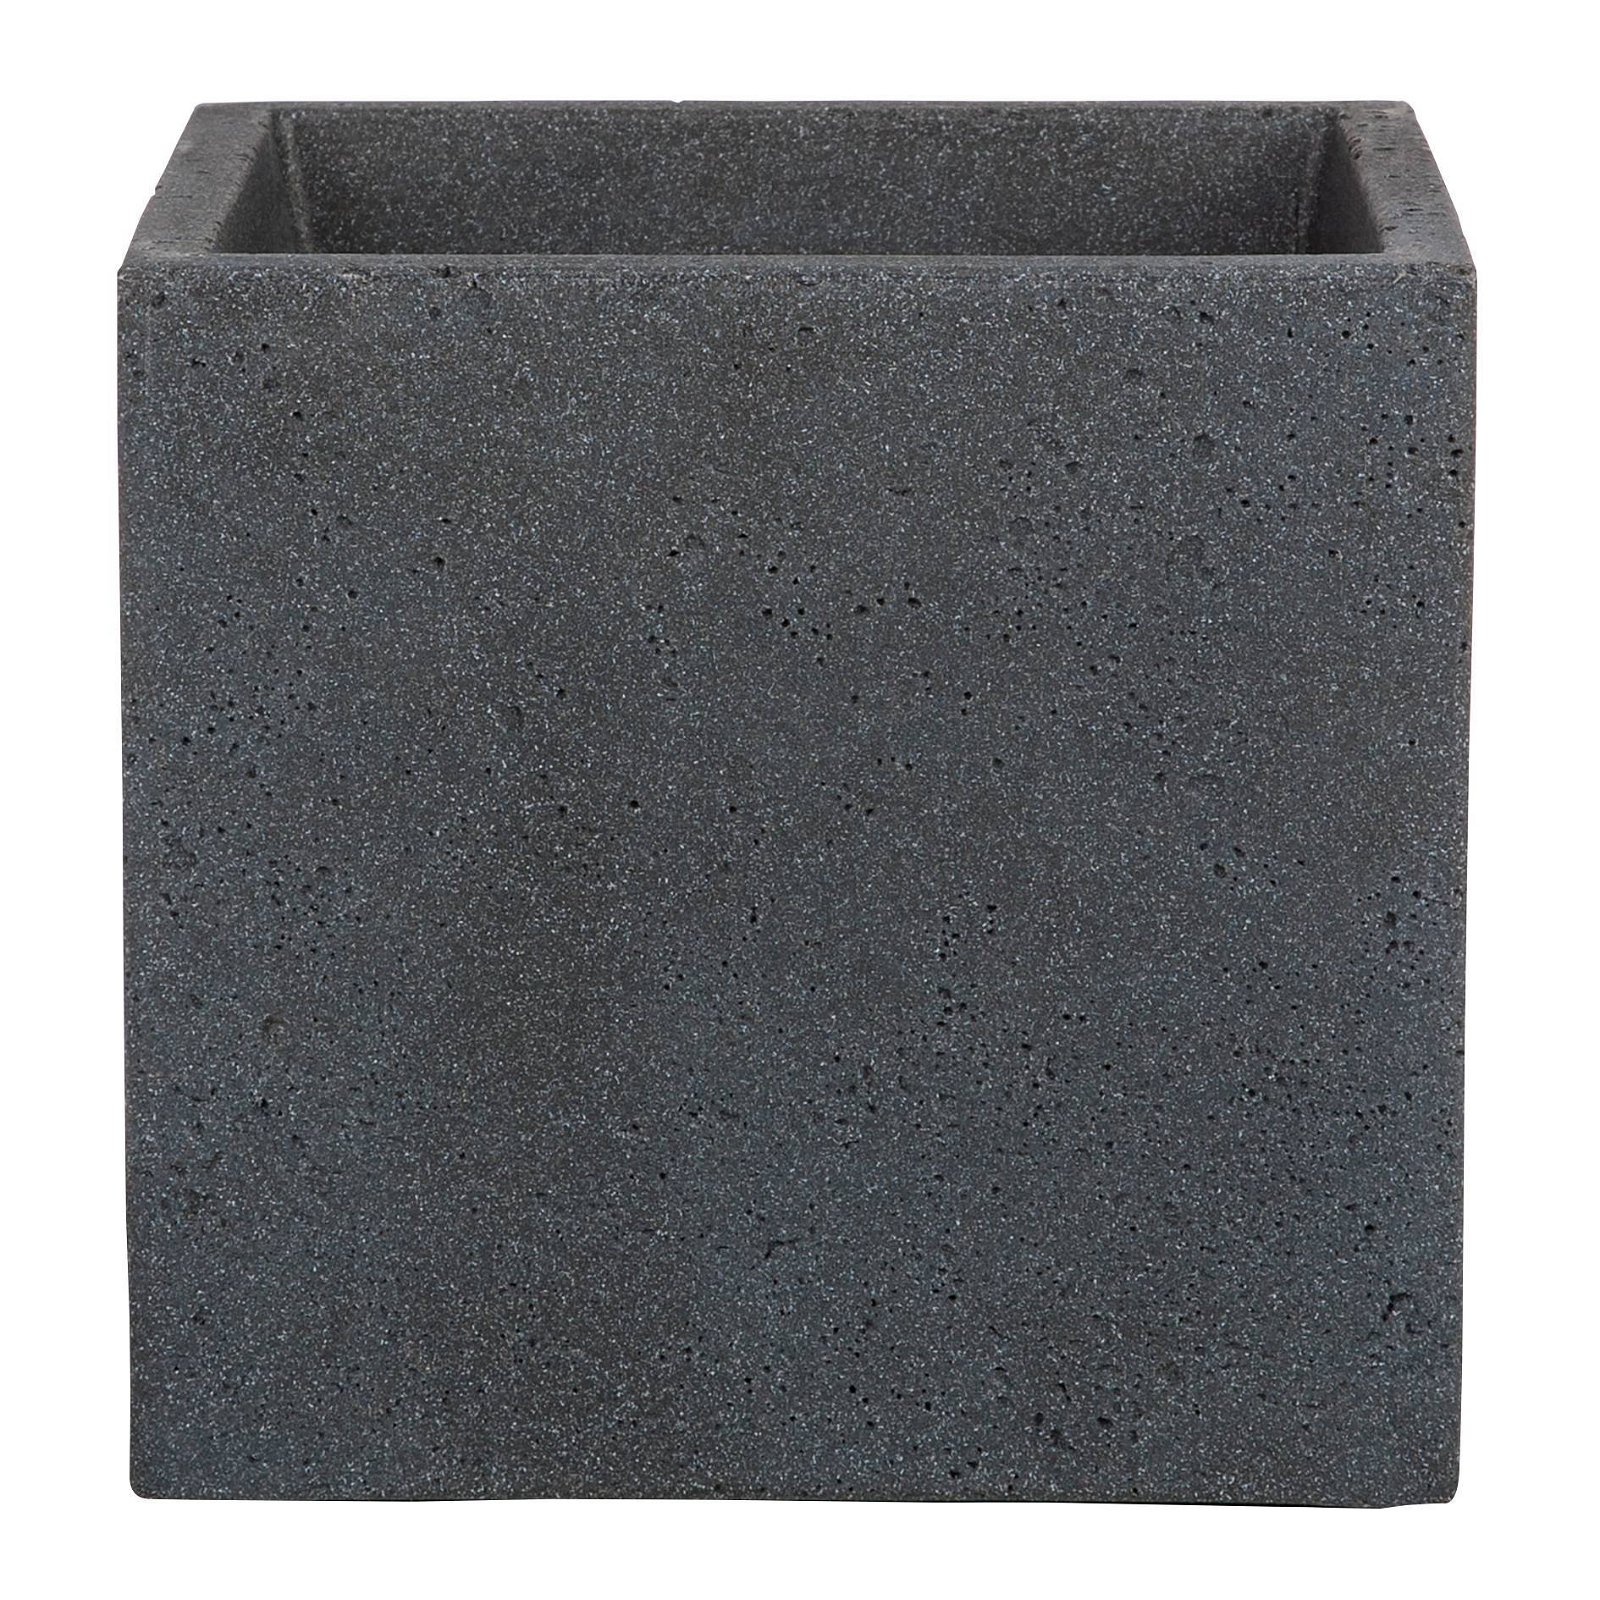 Pflanzkübel 'C-Cube', Stony Black, 38 x 39 x H 33 cm, 44 Liter